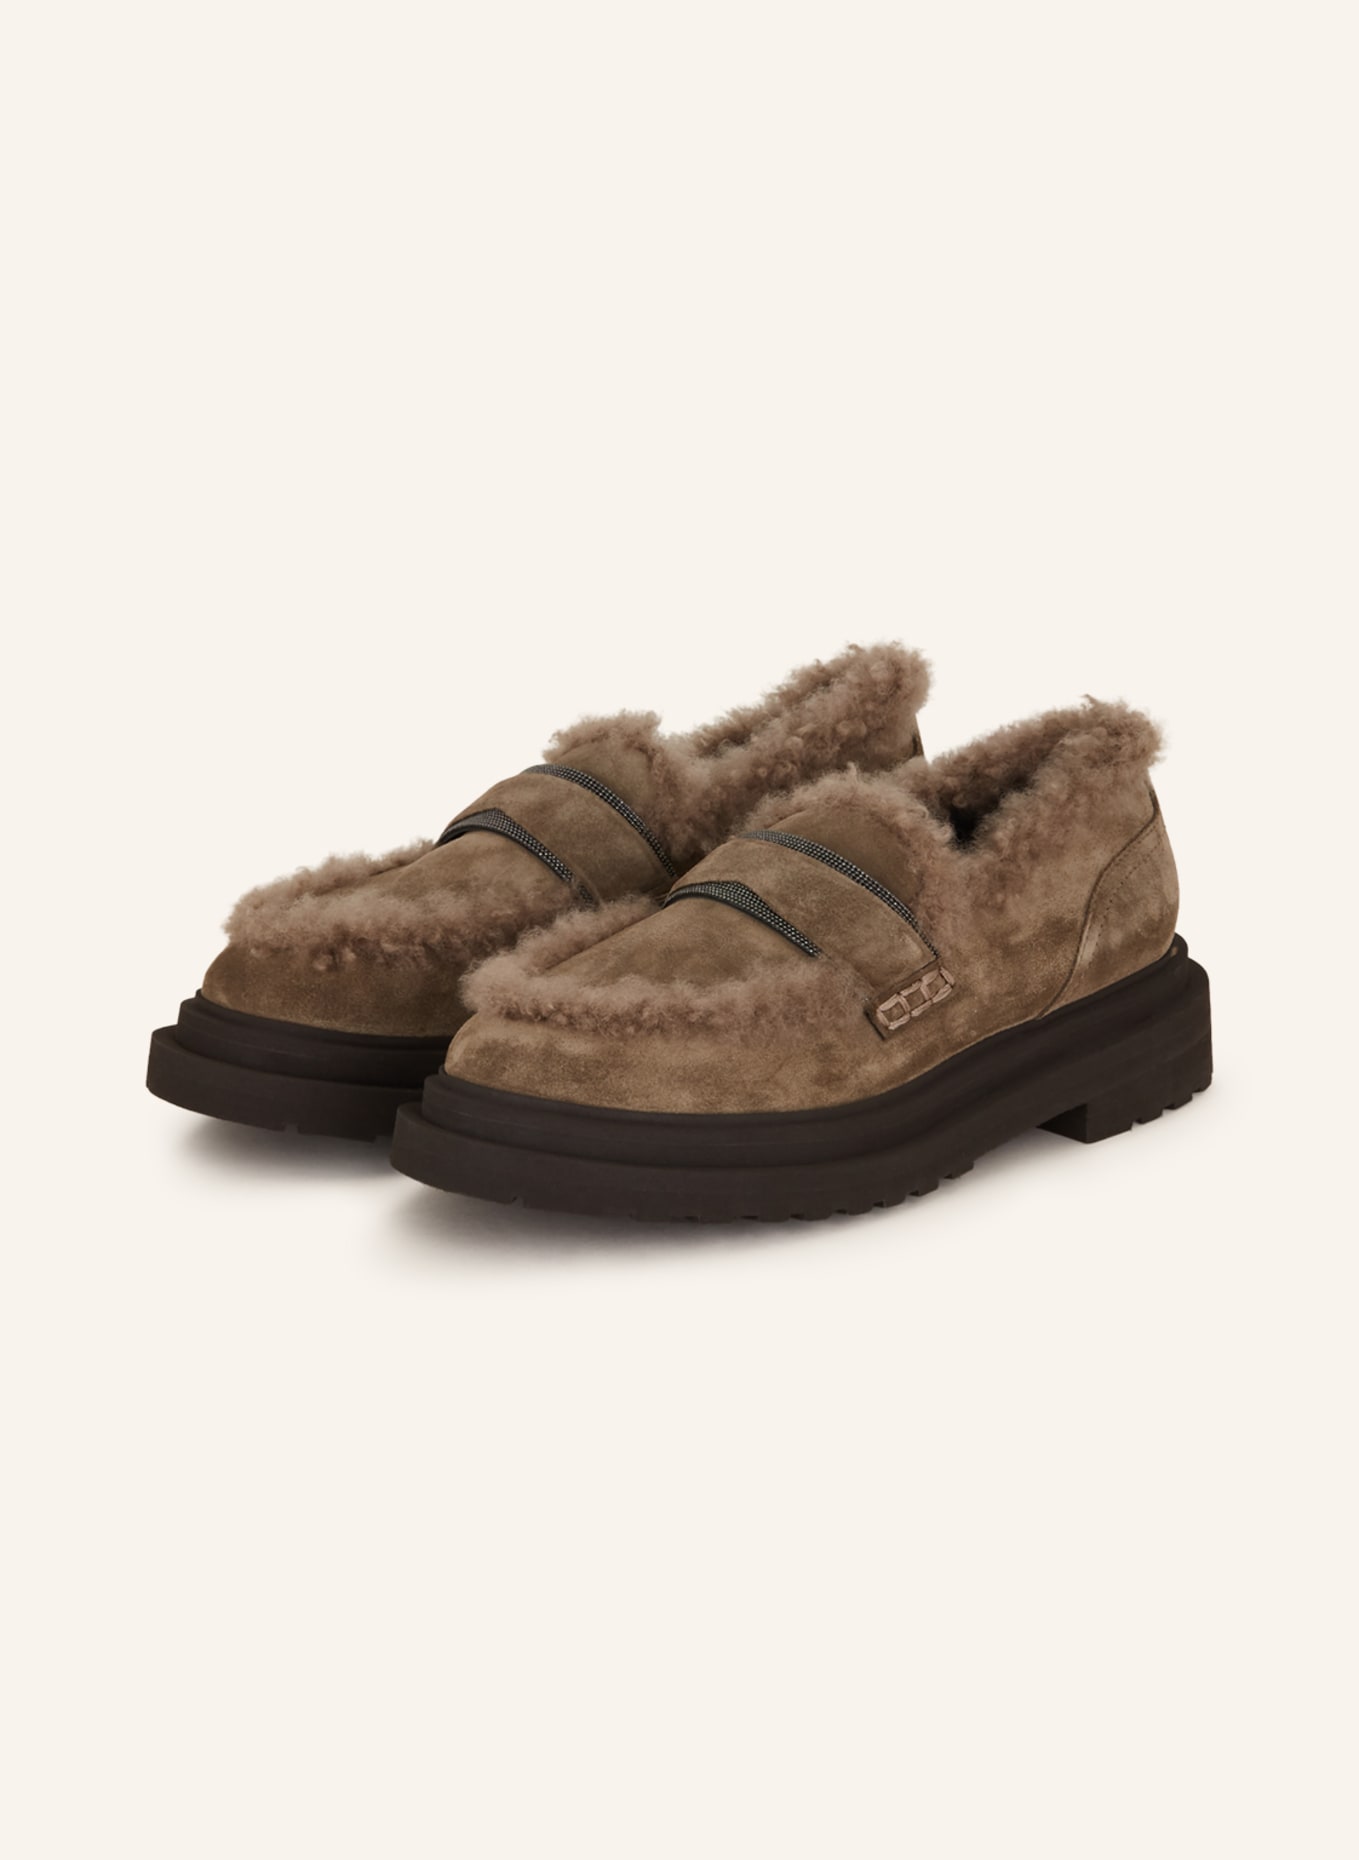 BRUNELLO CUCINELLI Penny-Loafer mit Schaffell, Farbe: TAUPE (Bild 1)